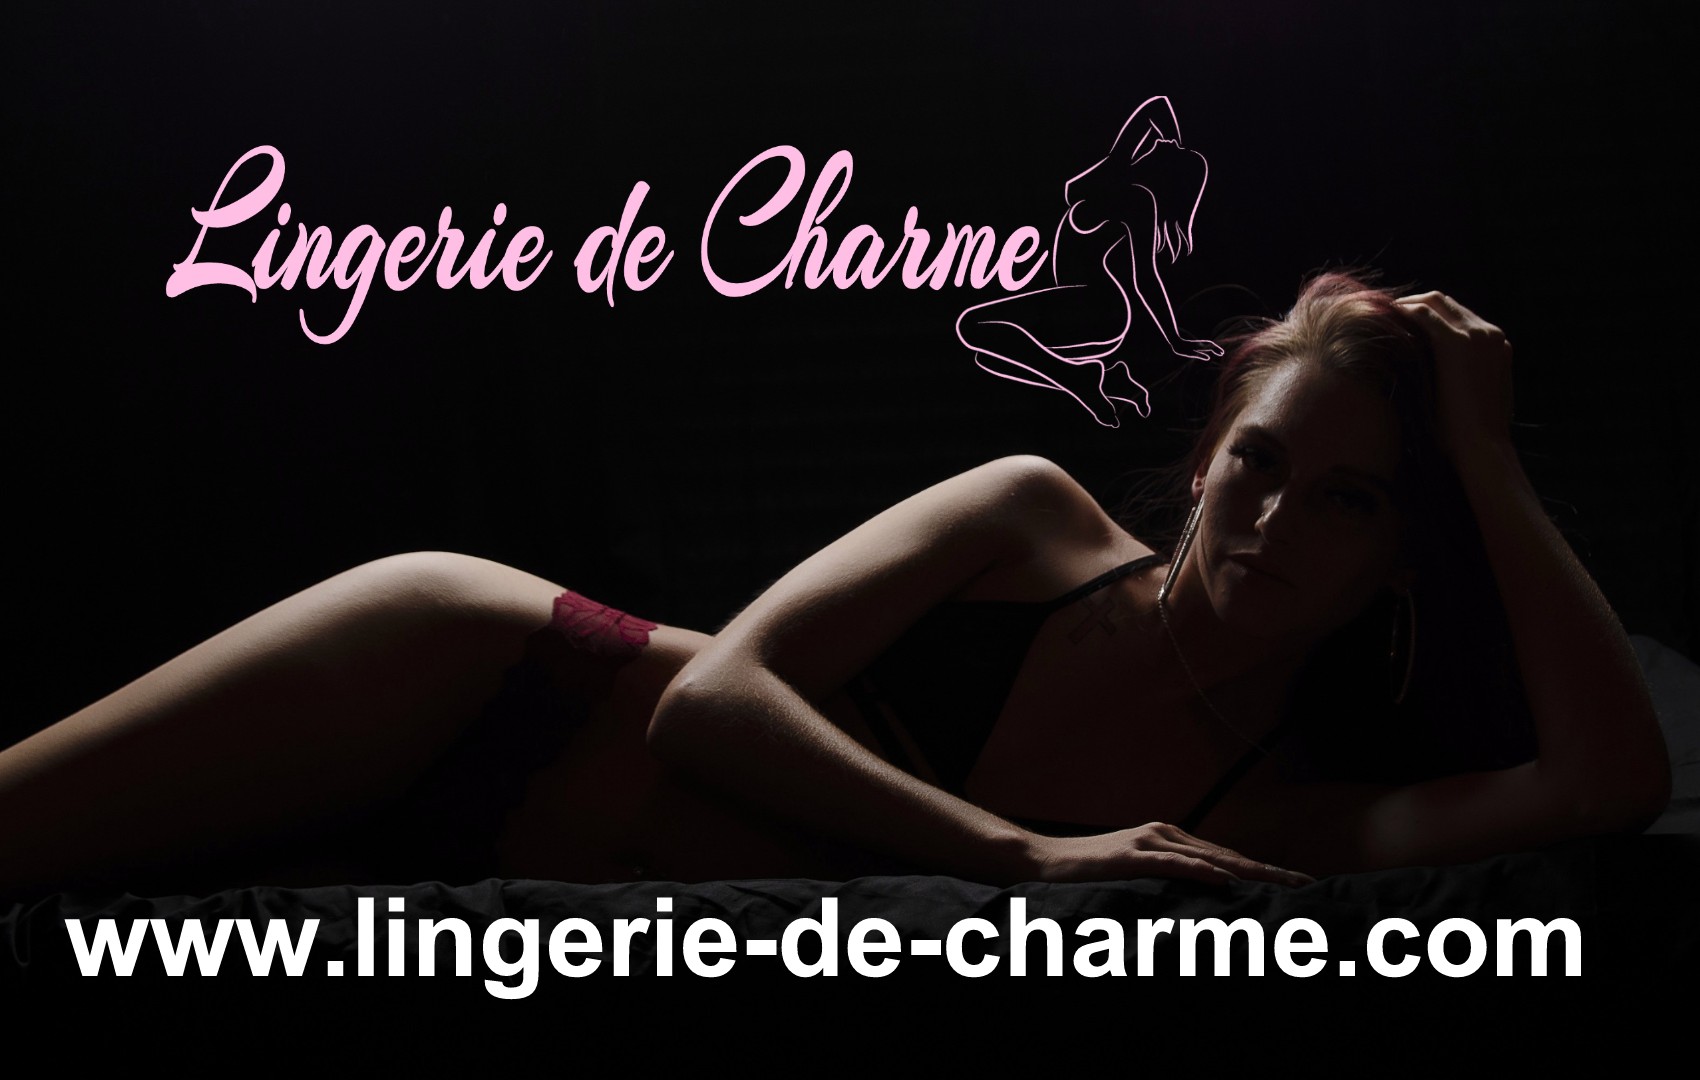 LINGERIE DE CHARME MANSLE 16 - LINGERIE SEXY MANSLE 16